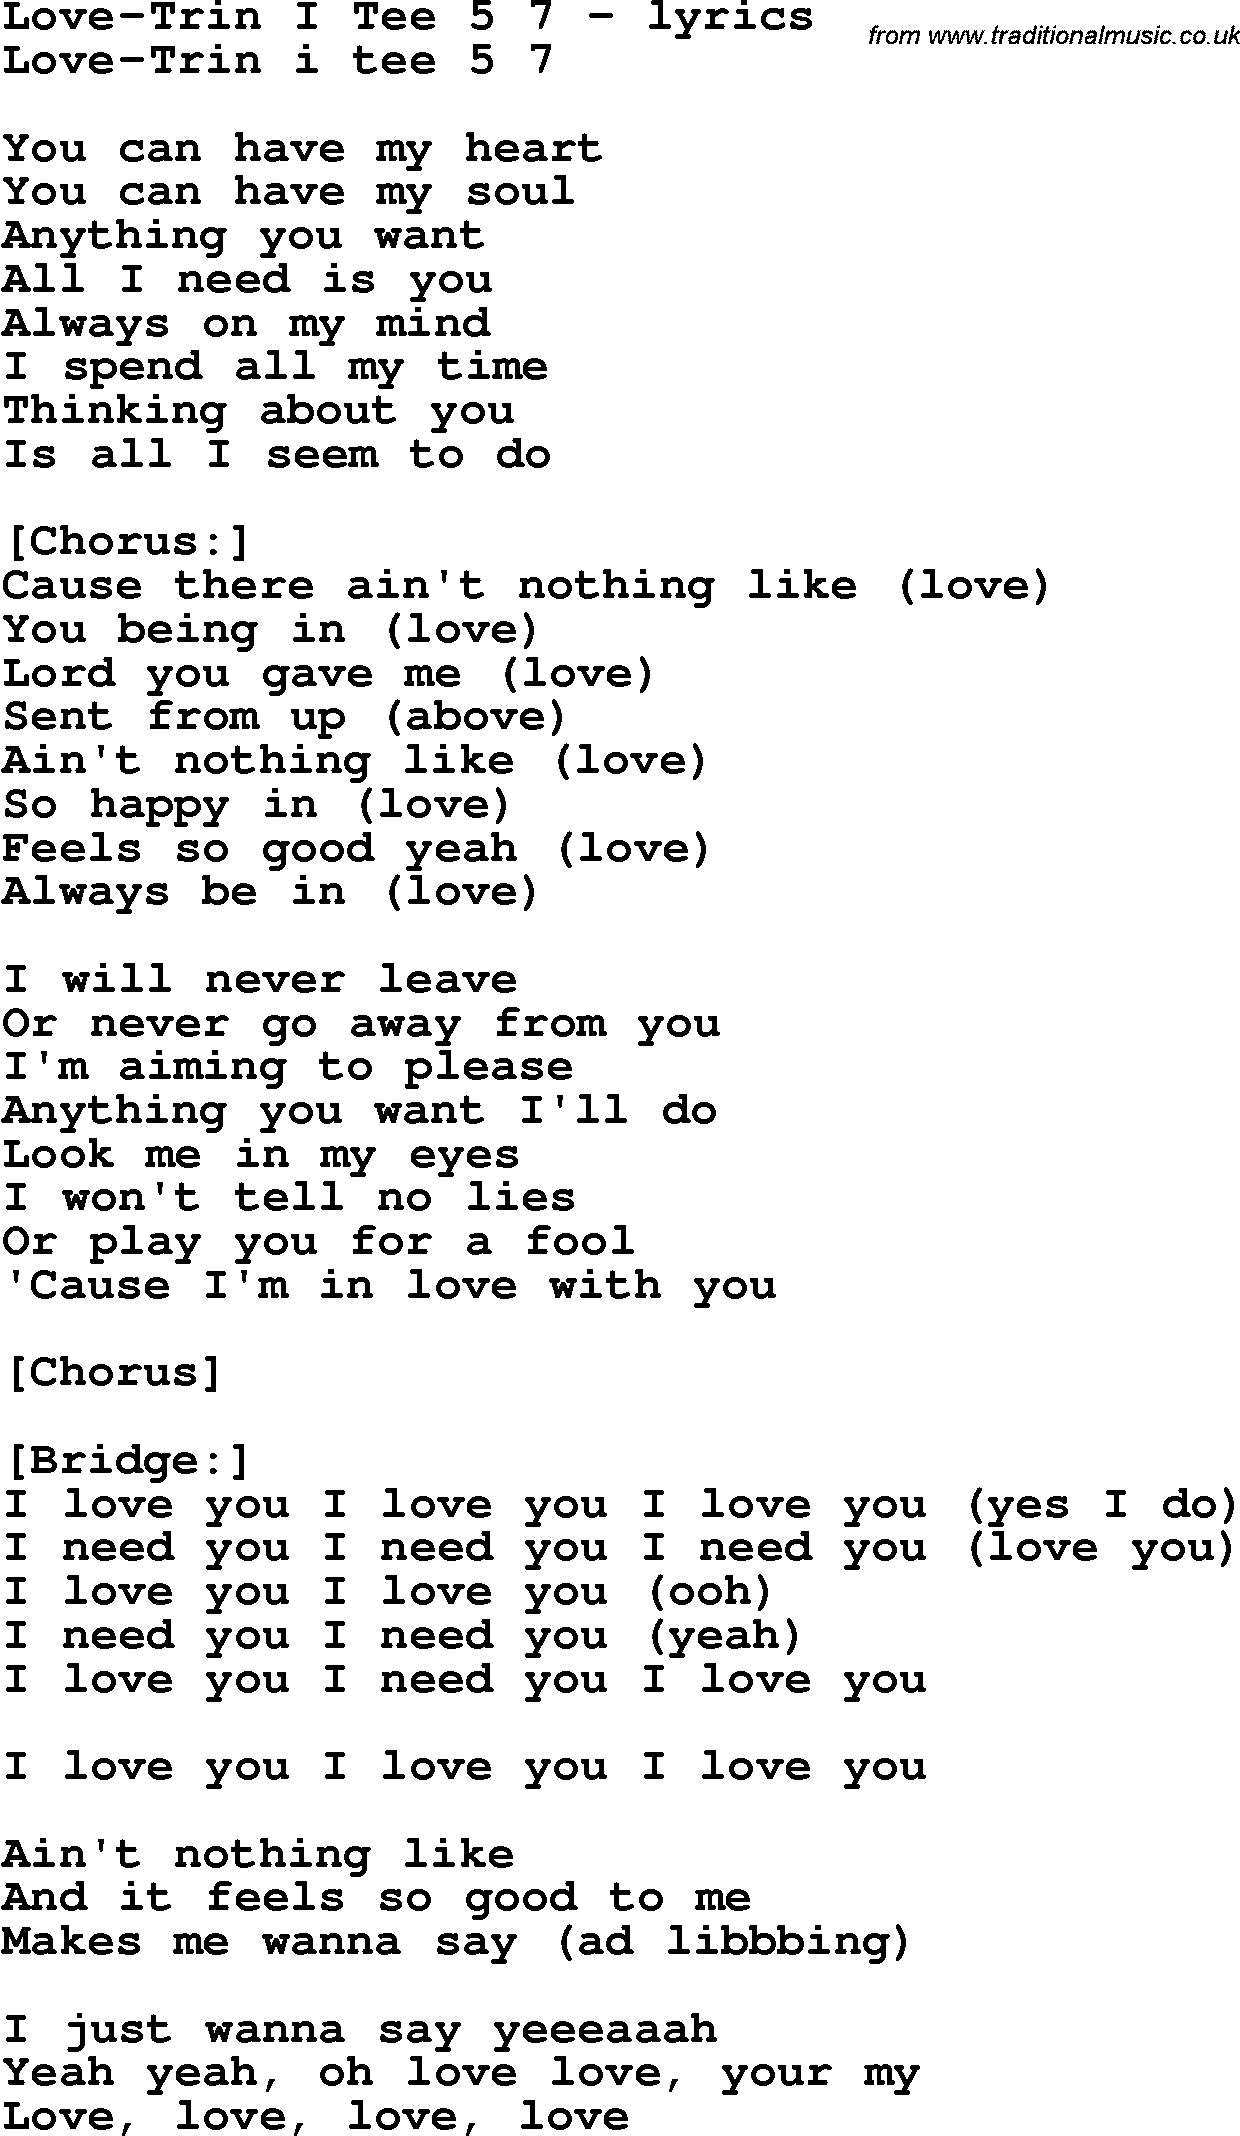 Love Song Lyrics for: Love-Trin I Tee 5 7